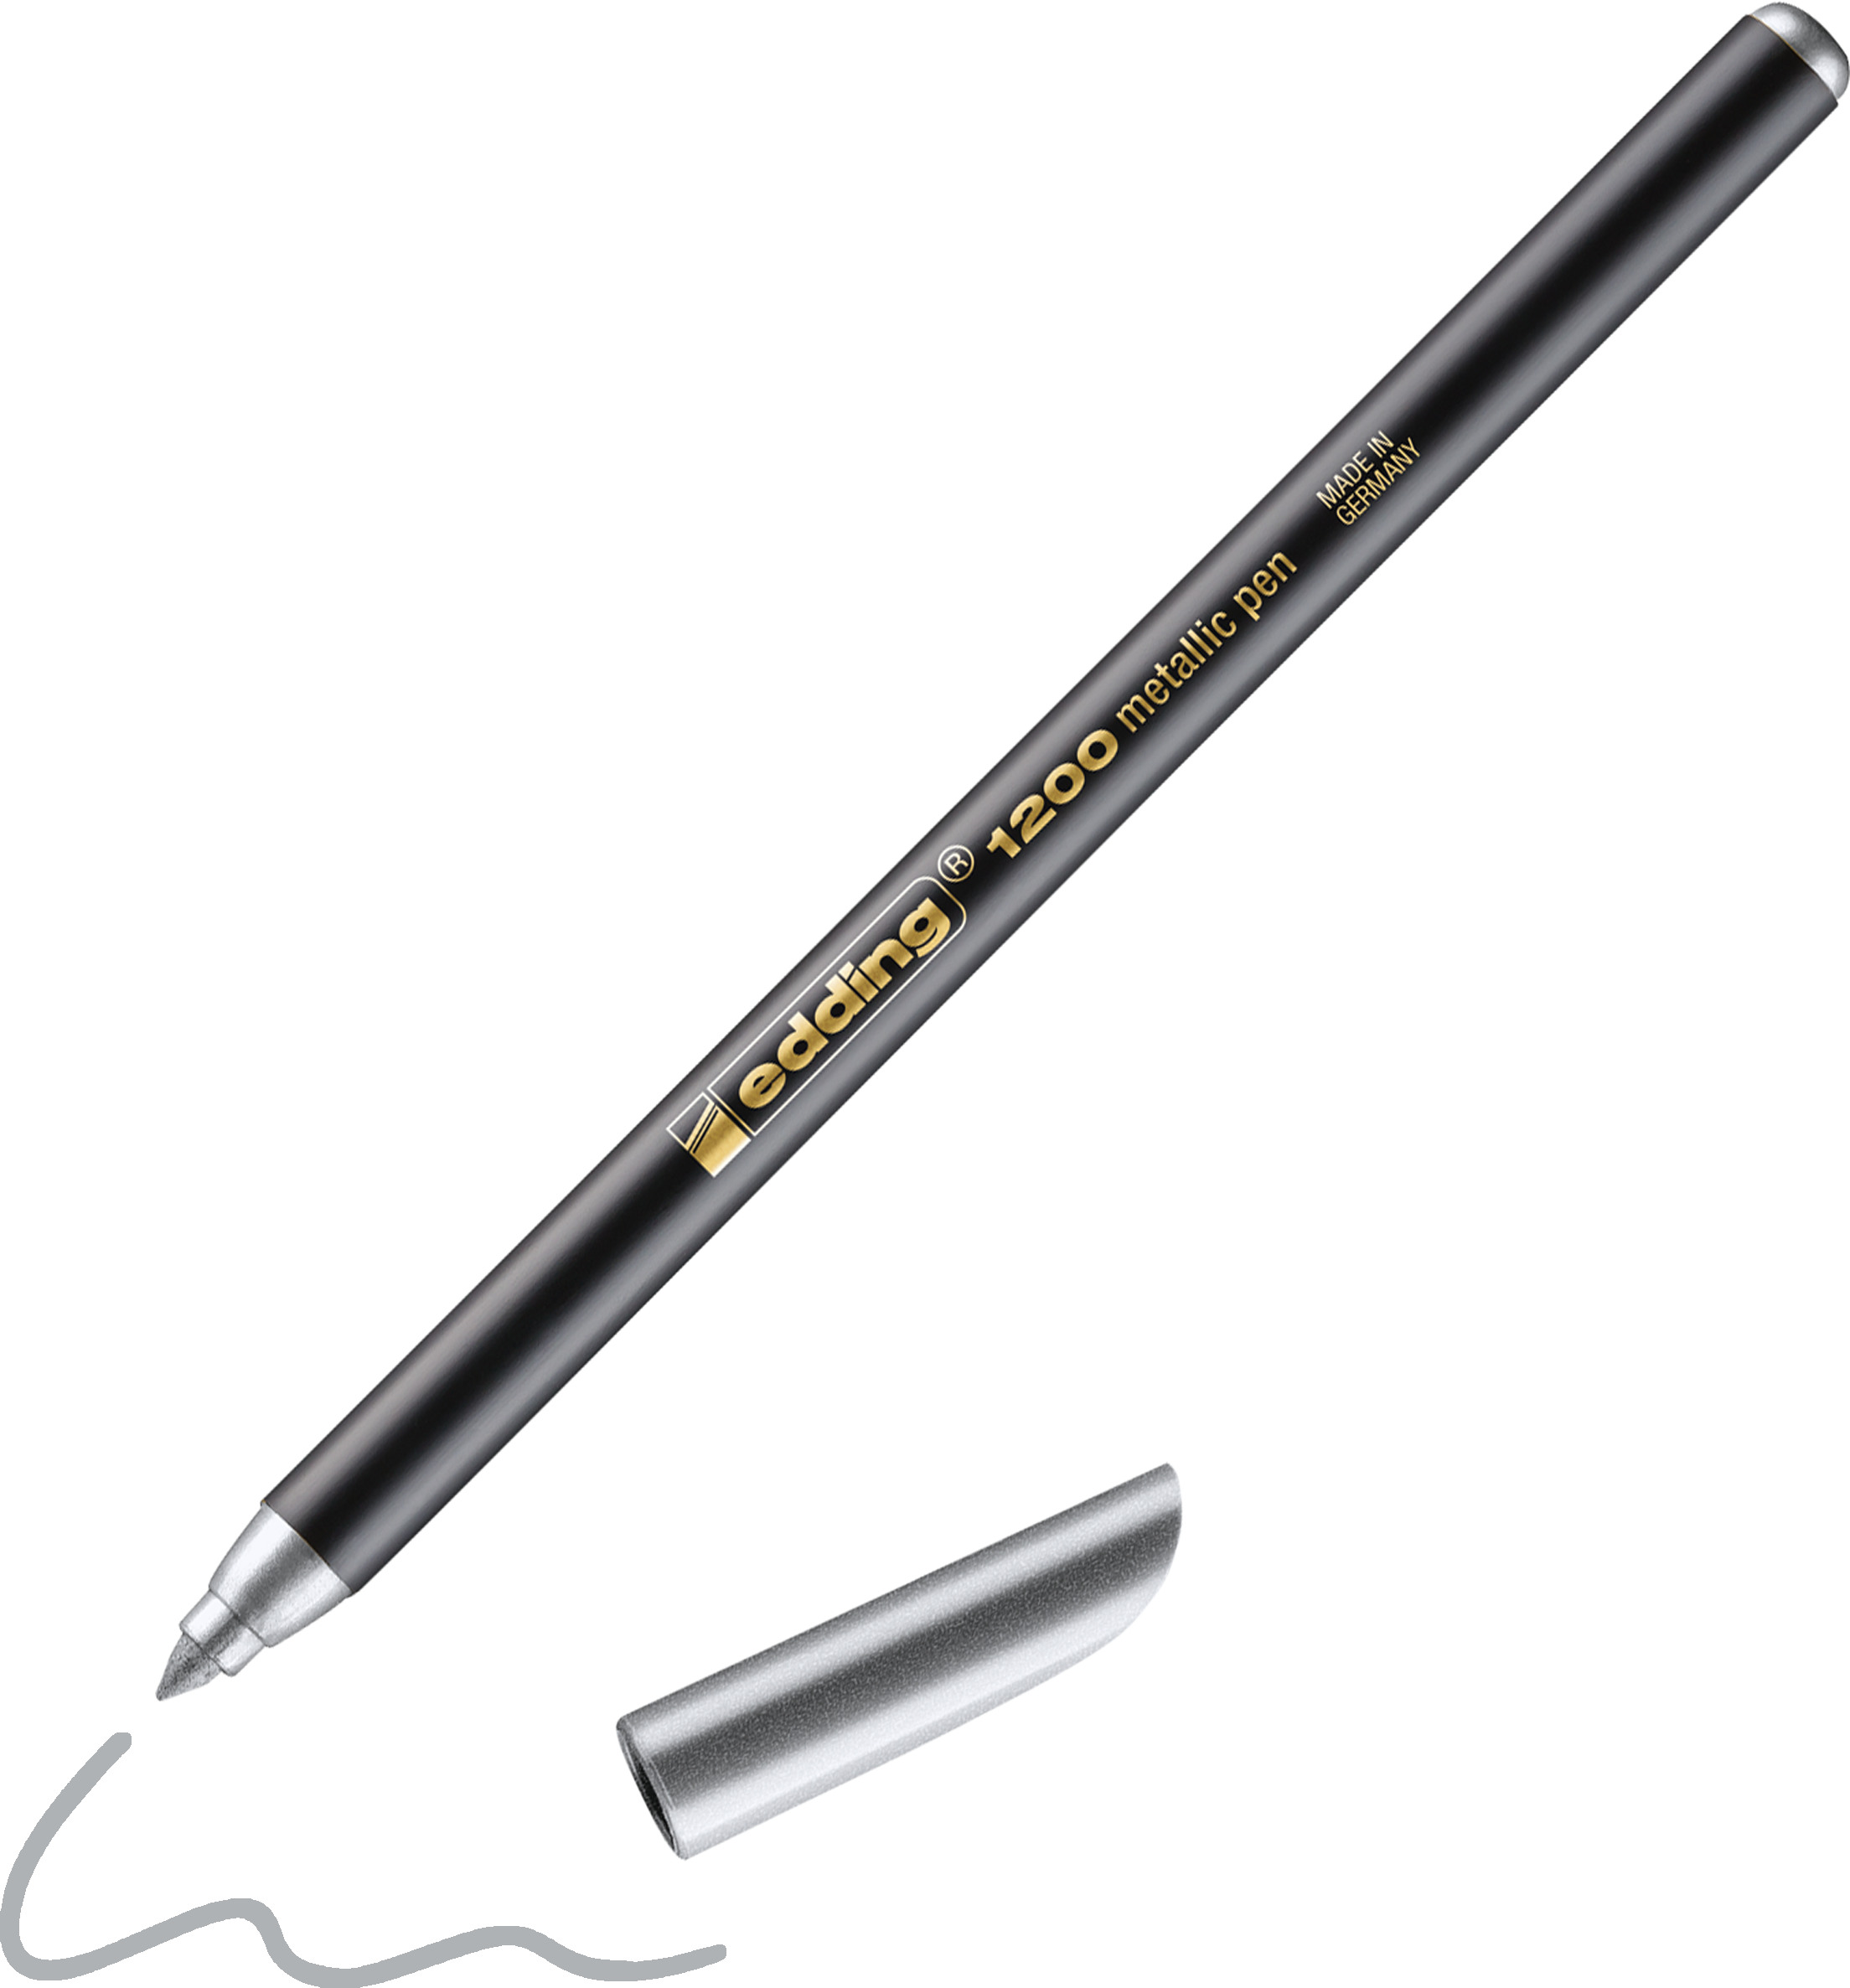 EDDING Metallic Color Pen 1200 1-3mm 1200-54 argent